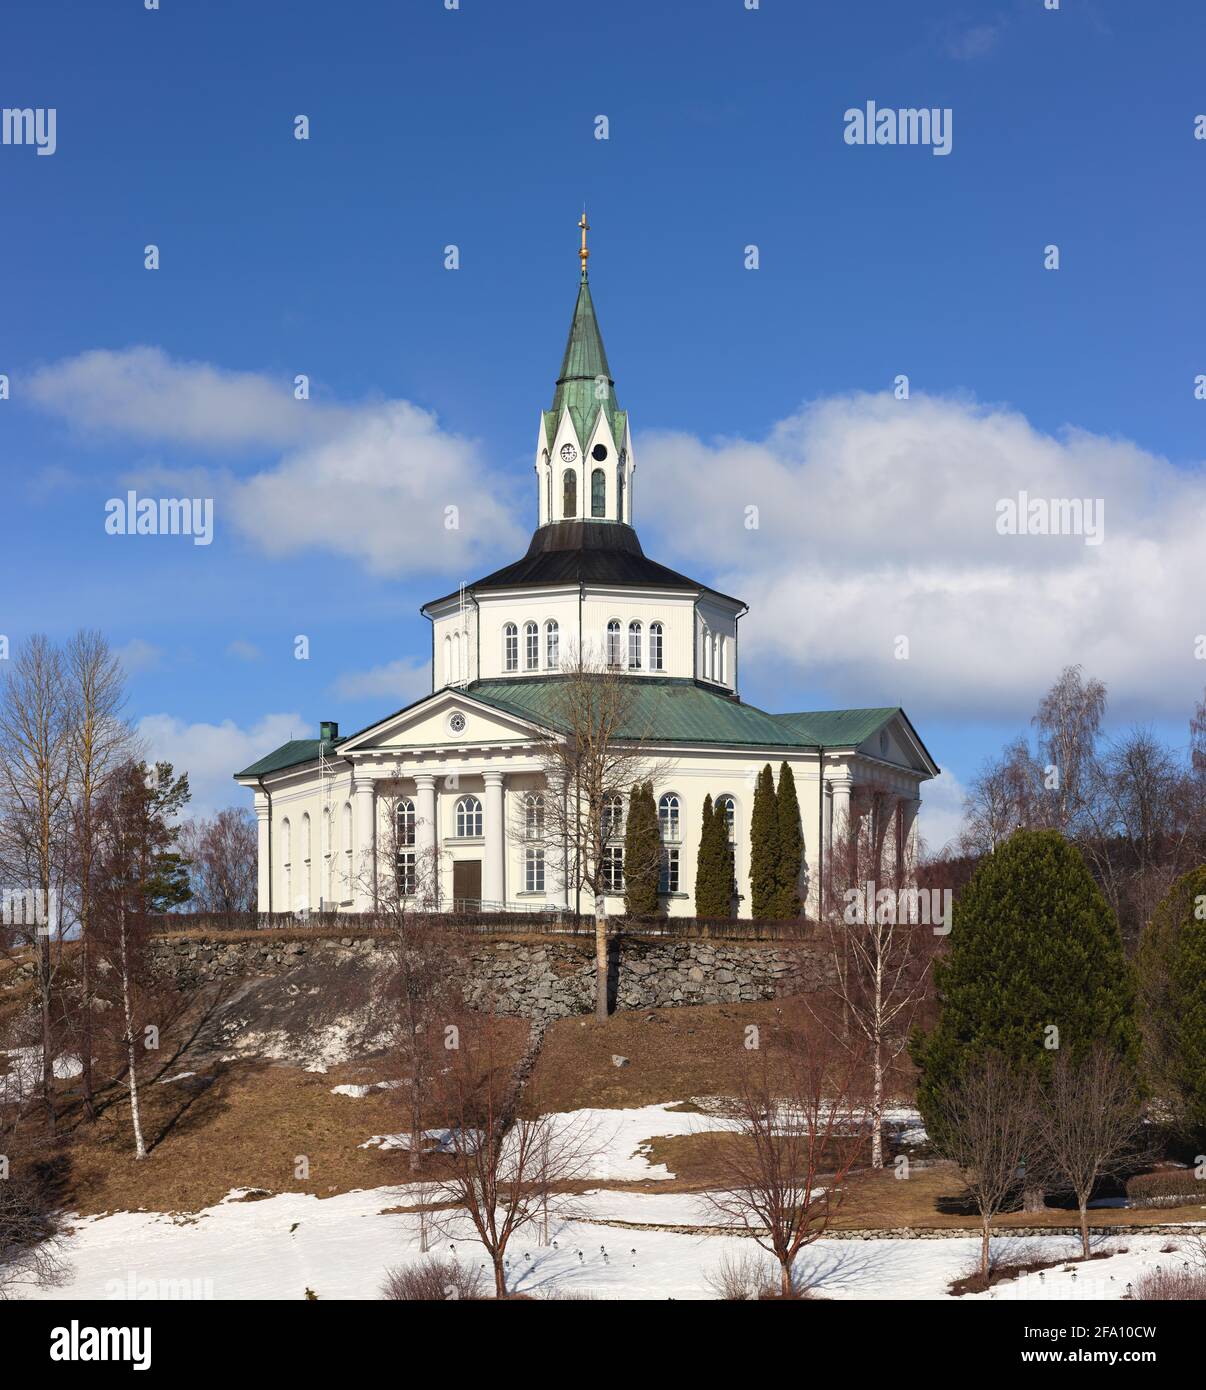 Själevads kyrka (église Själevad) près d'Örnsköldsvik, Suède Banque D'Images